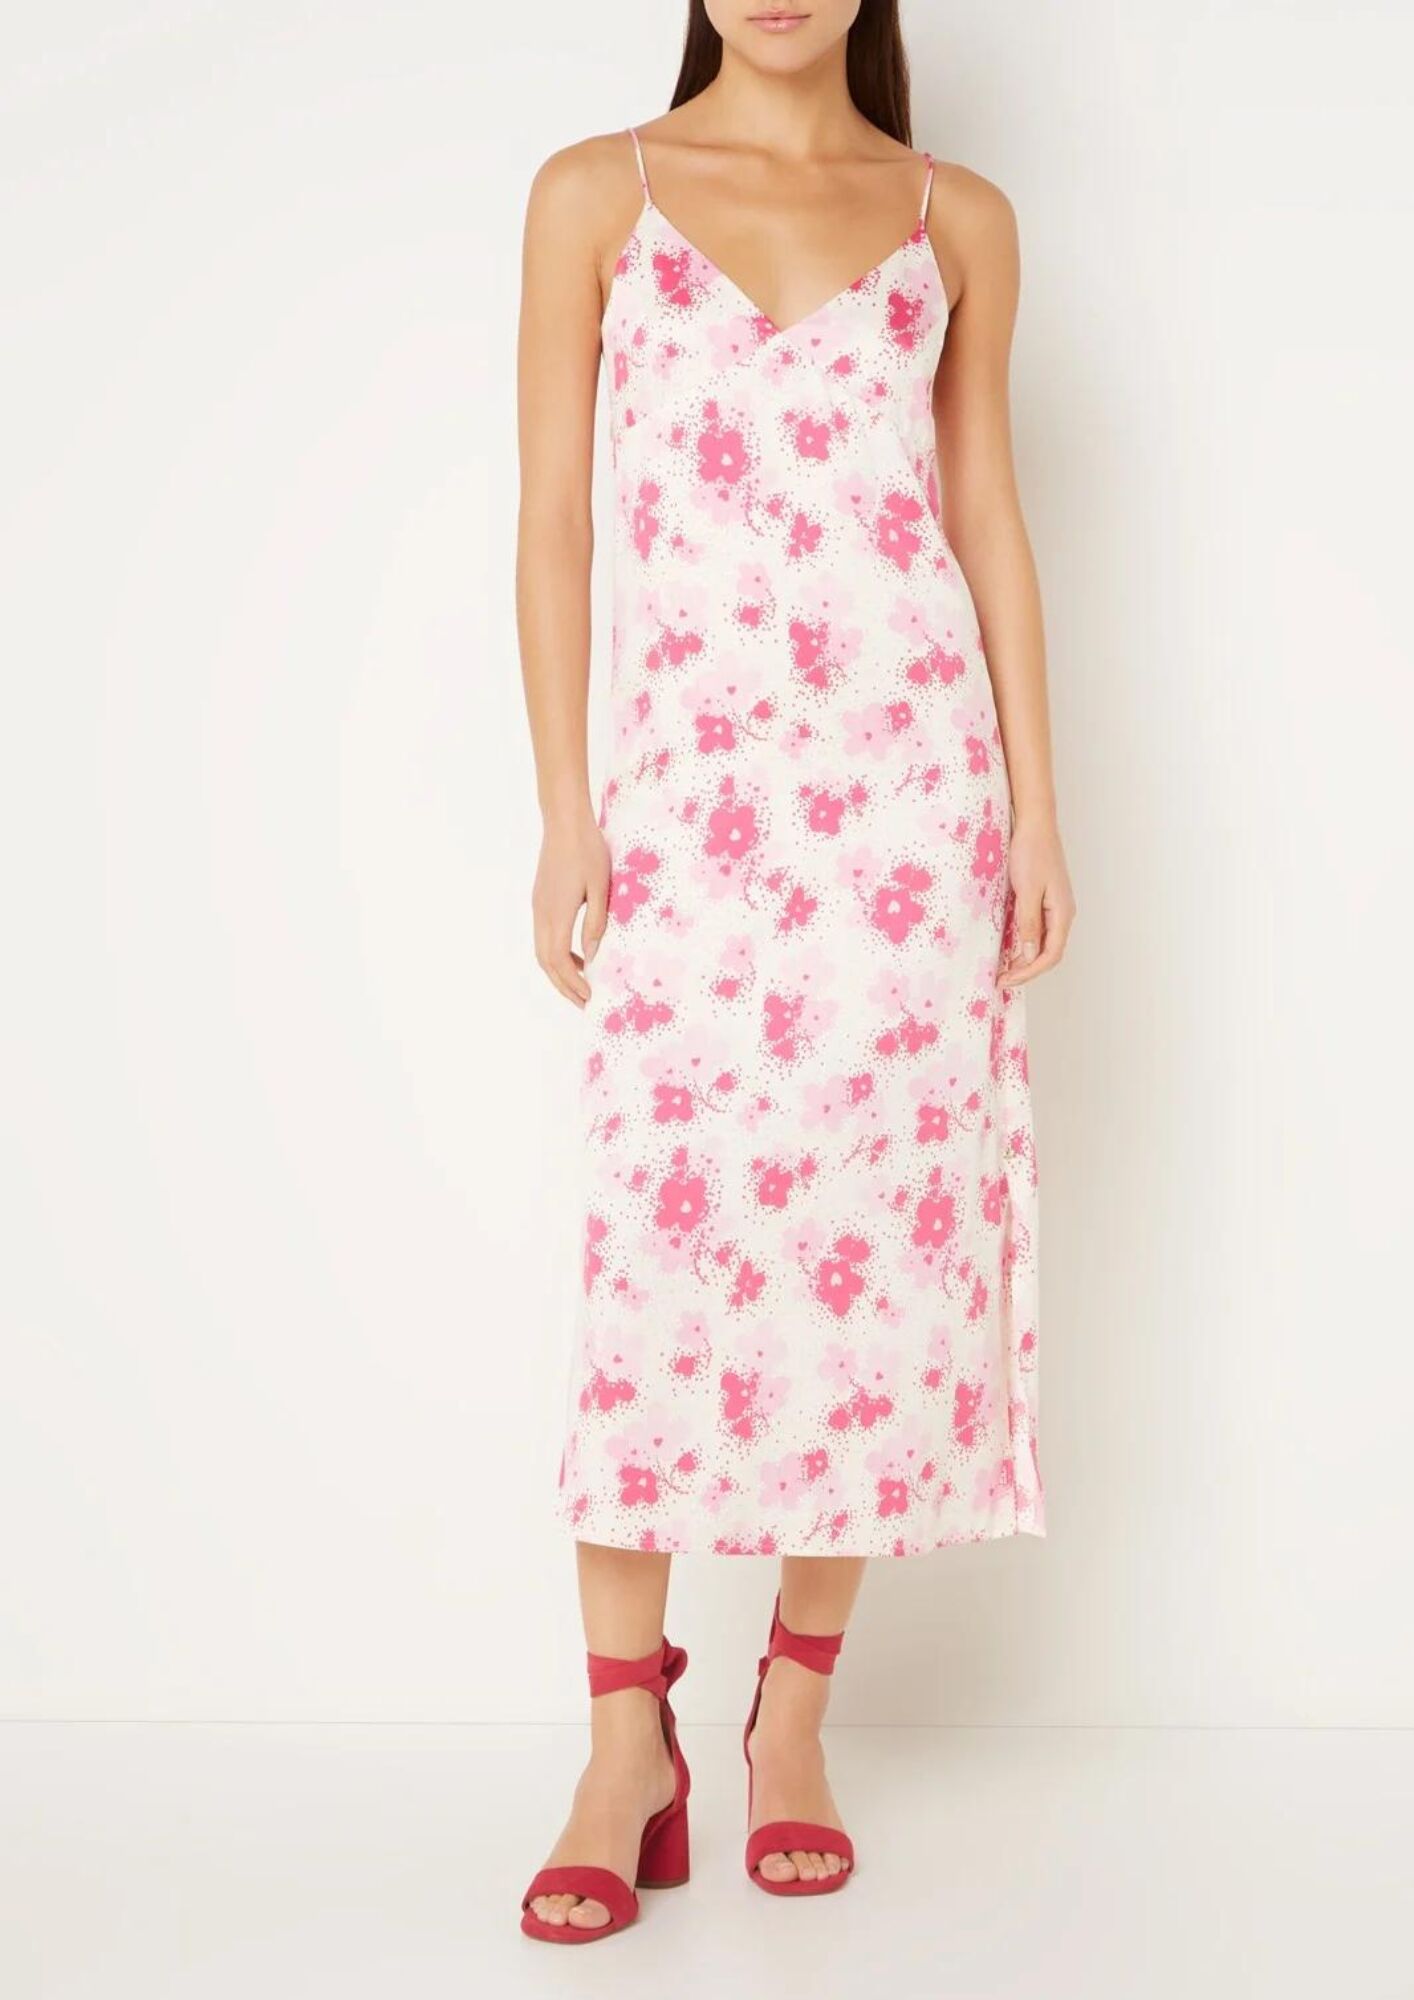 Maxi dress floral print pink